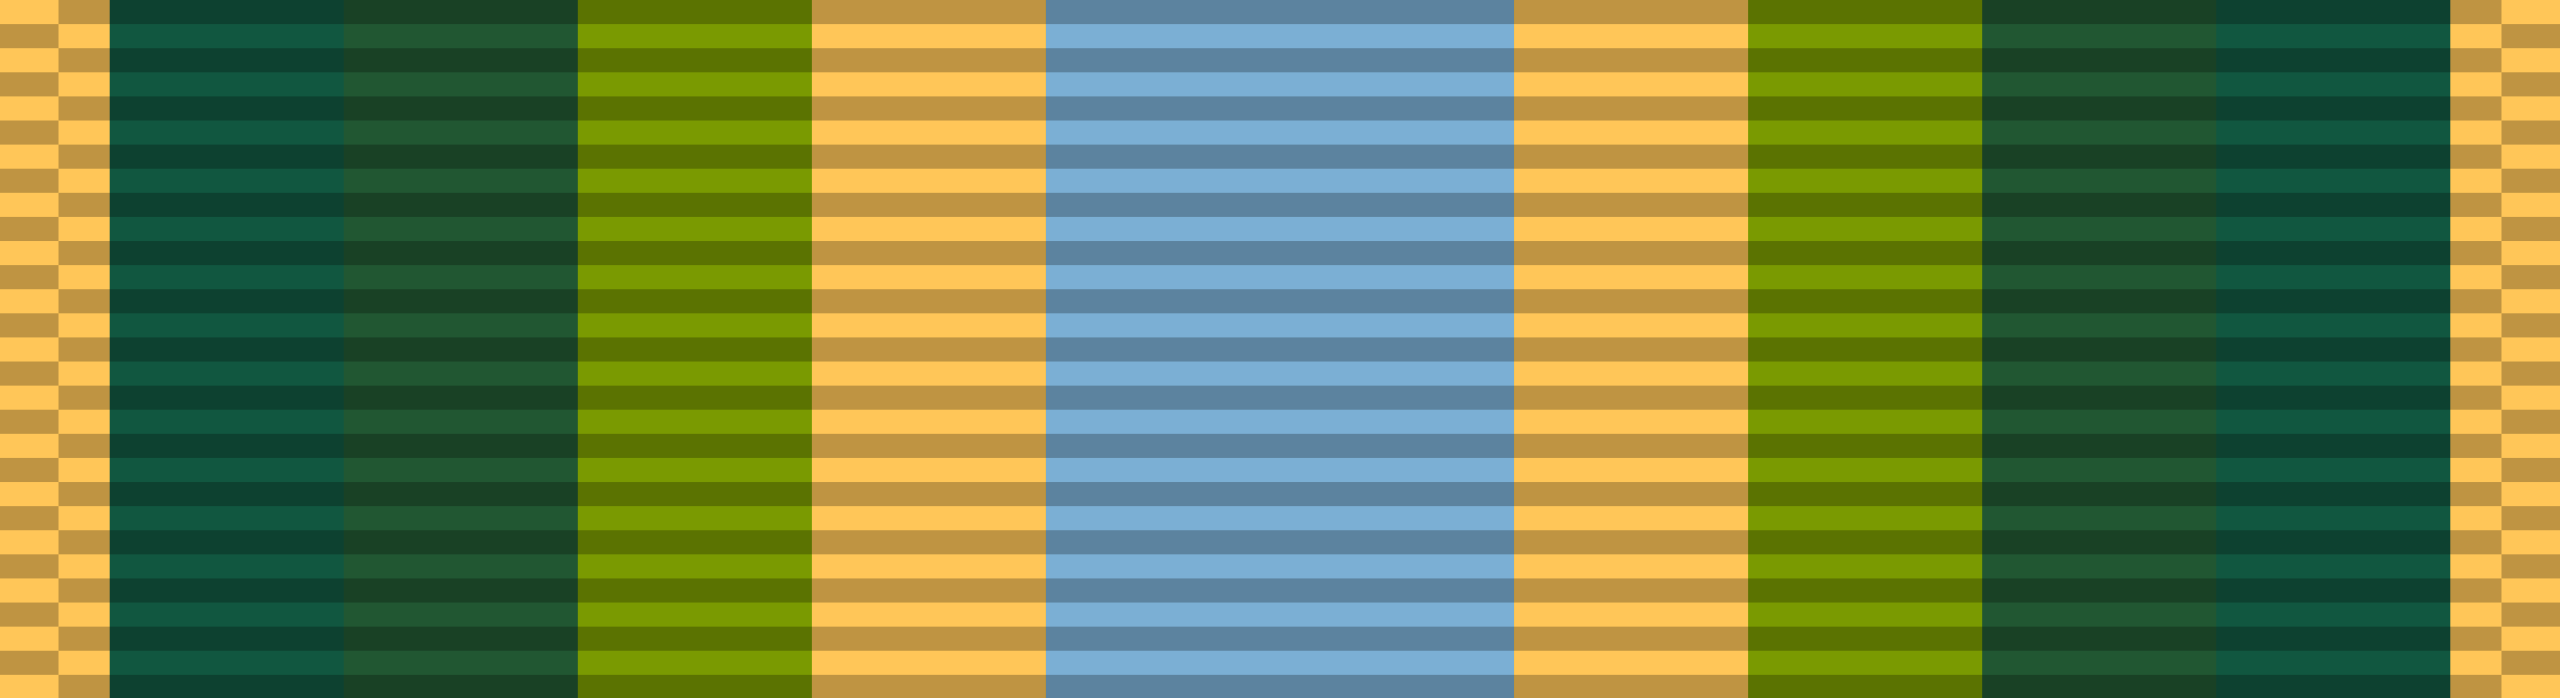 File:Silver ribbon.svg - Wikimedia Commons